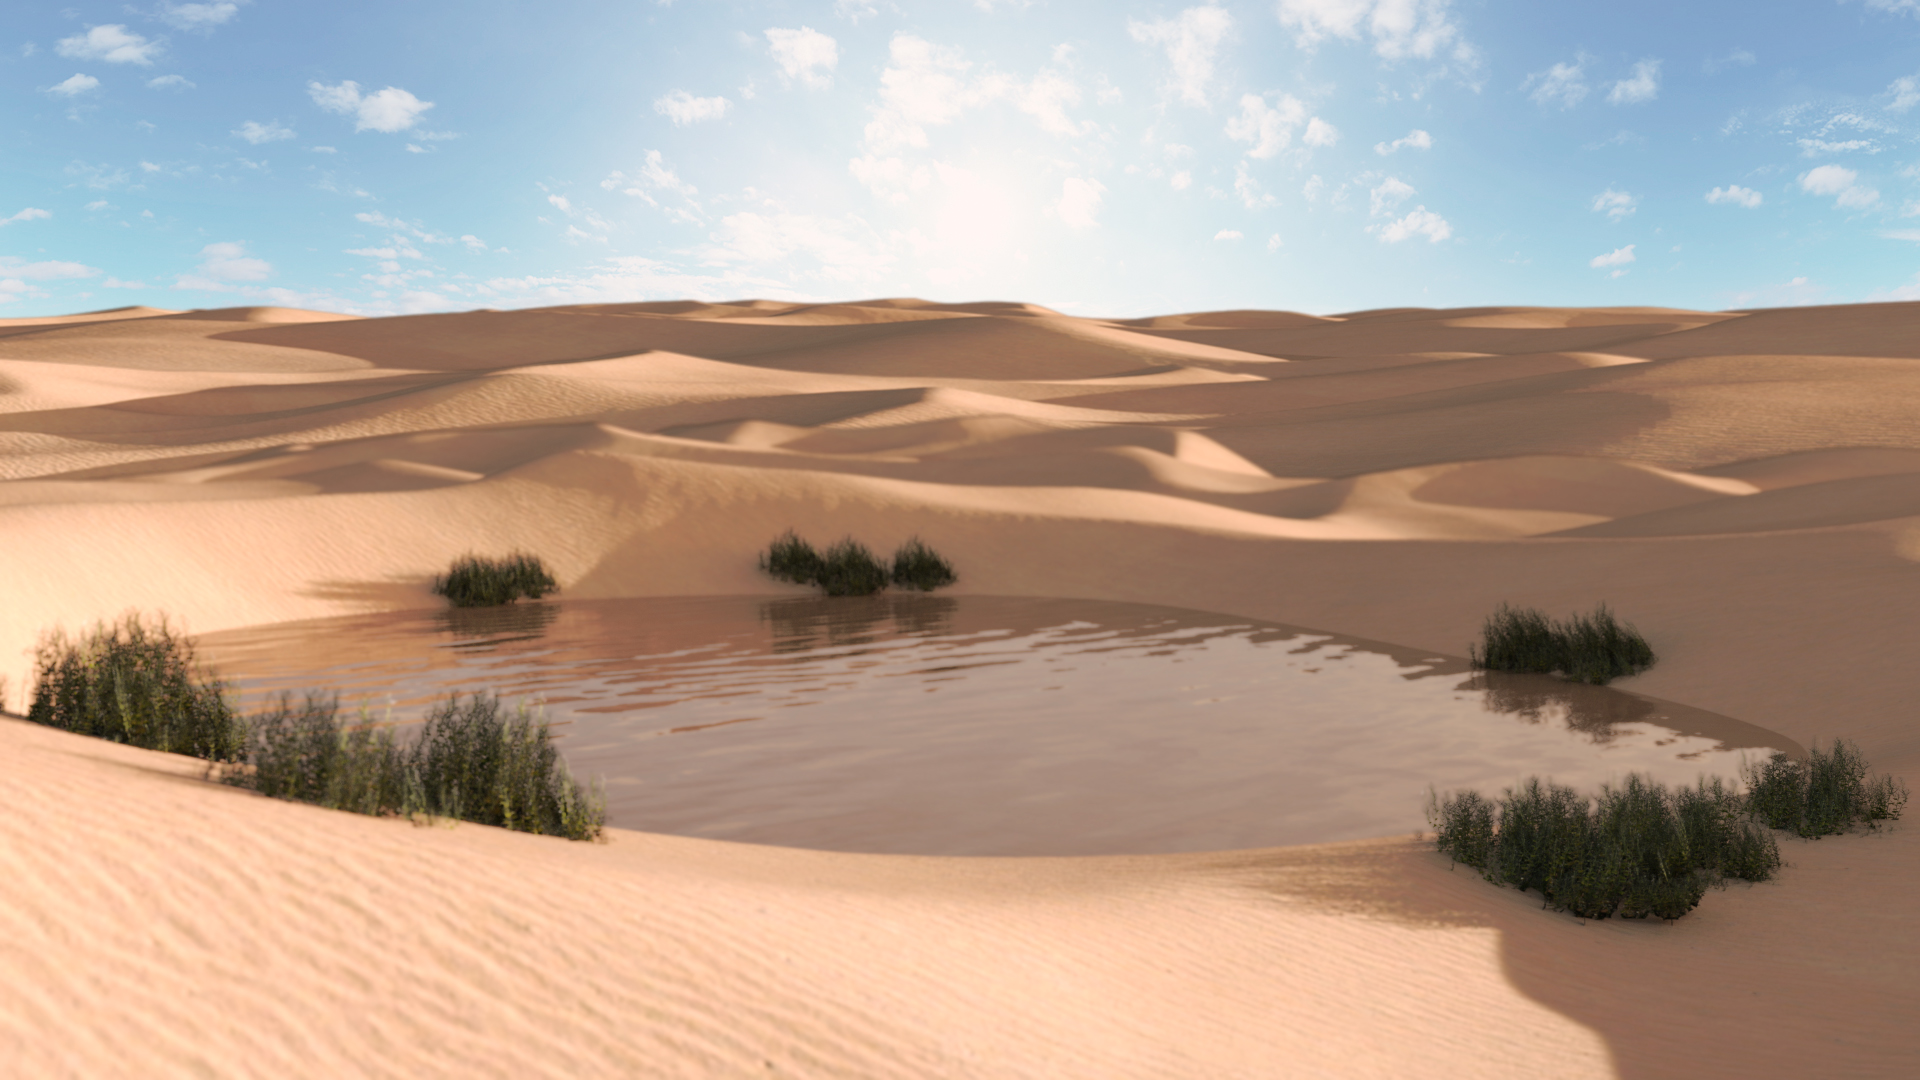 Arid Desert by: 3dLab, 3D Models by Daz 3D